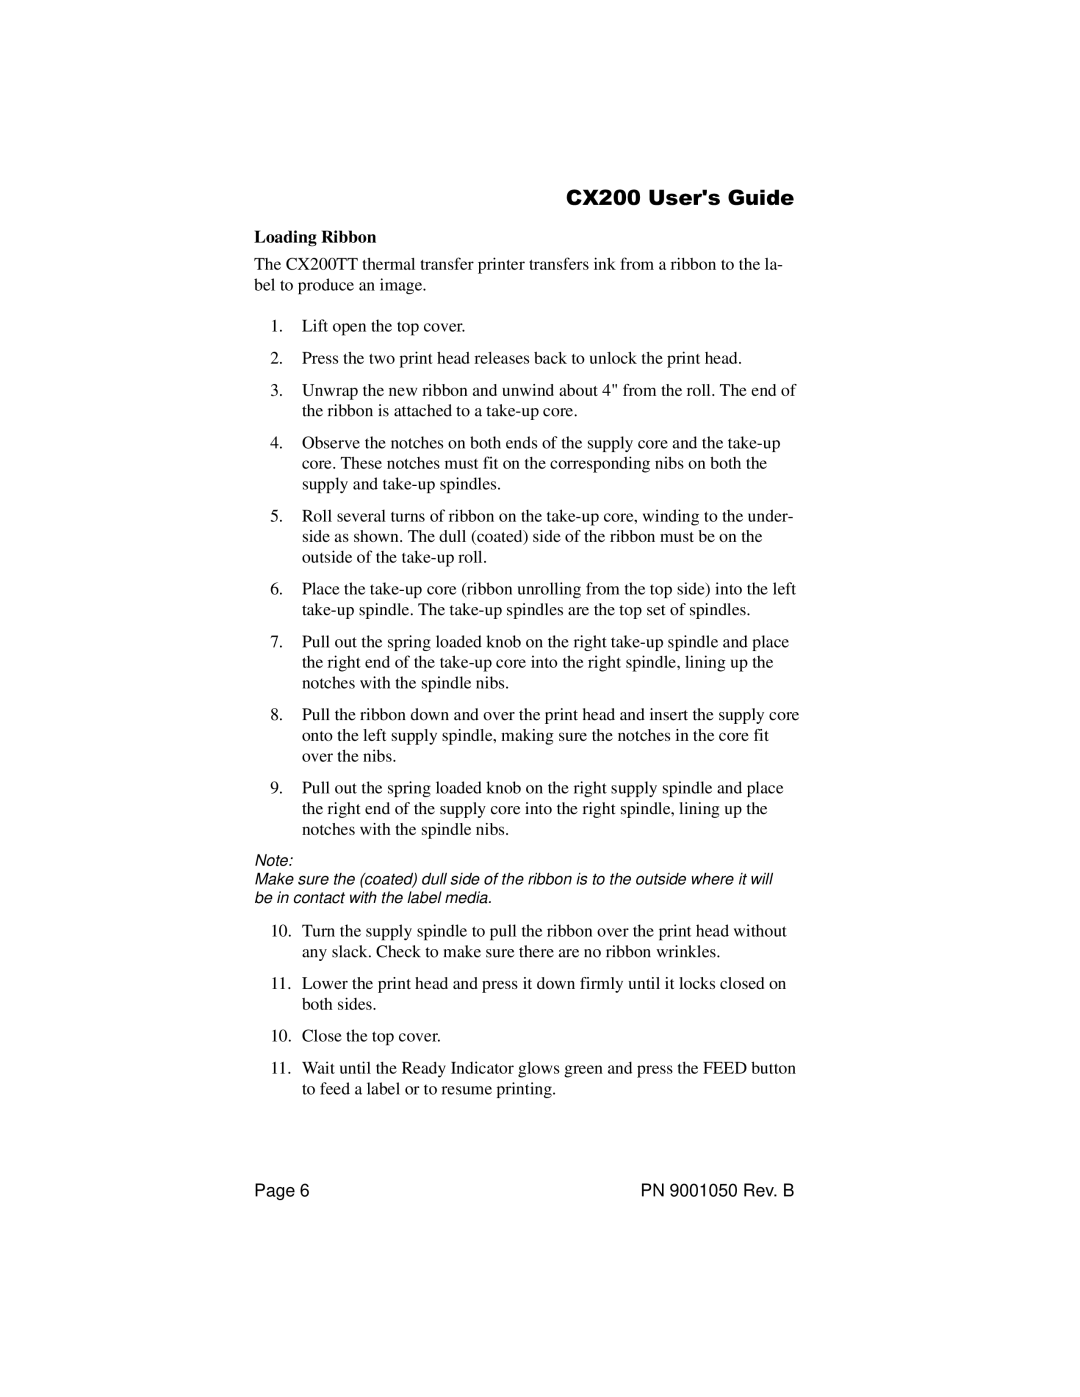 SATO manual Loading Ribbon, CX200 Users Guide 